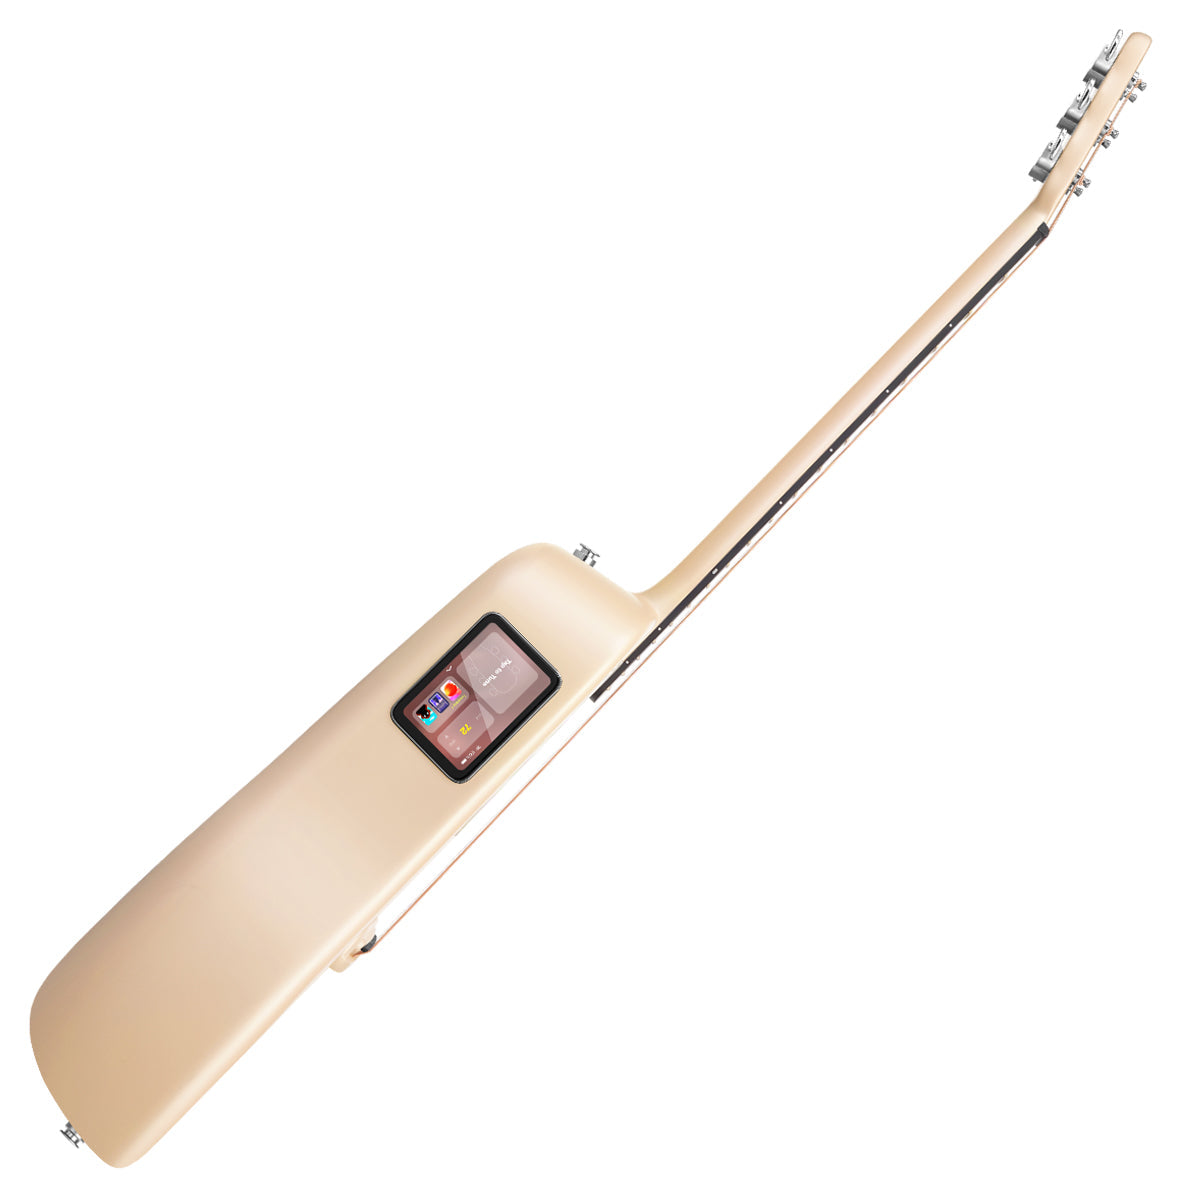 LAVA ME4 Carbon 36" with AirFlow Bag ~ Soft Gold, Acoustic Guitar for sale at Richards Guitars.